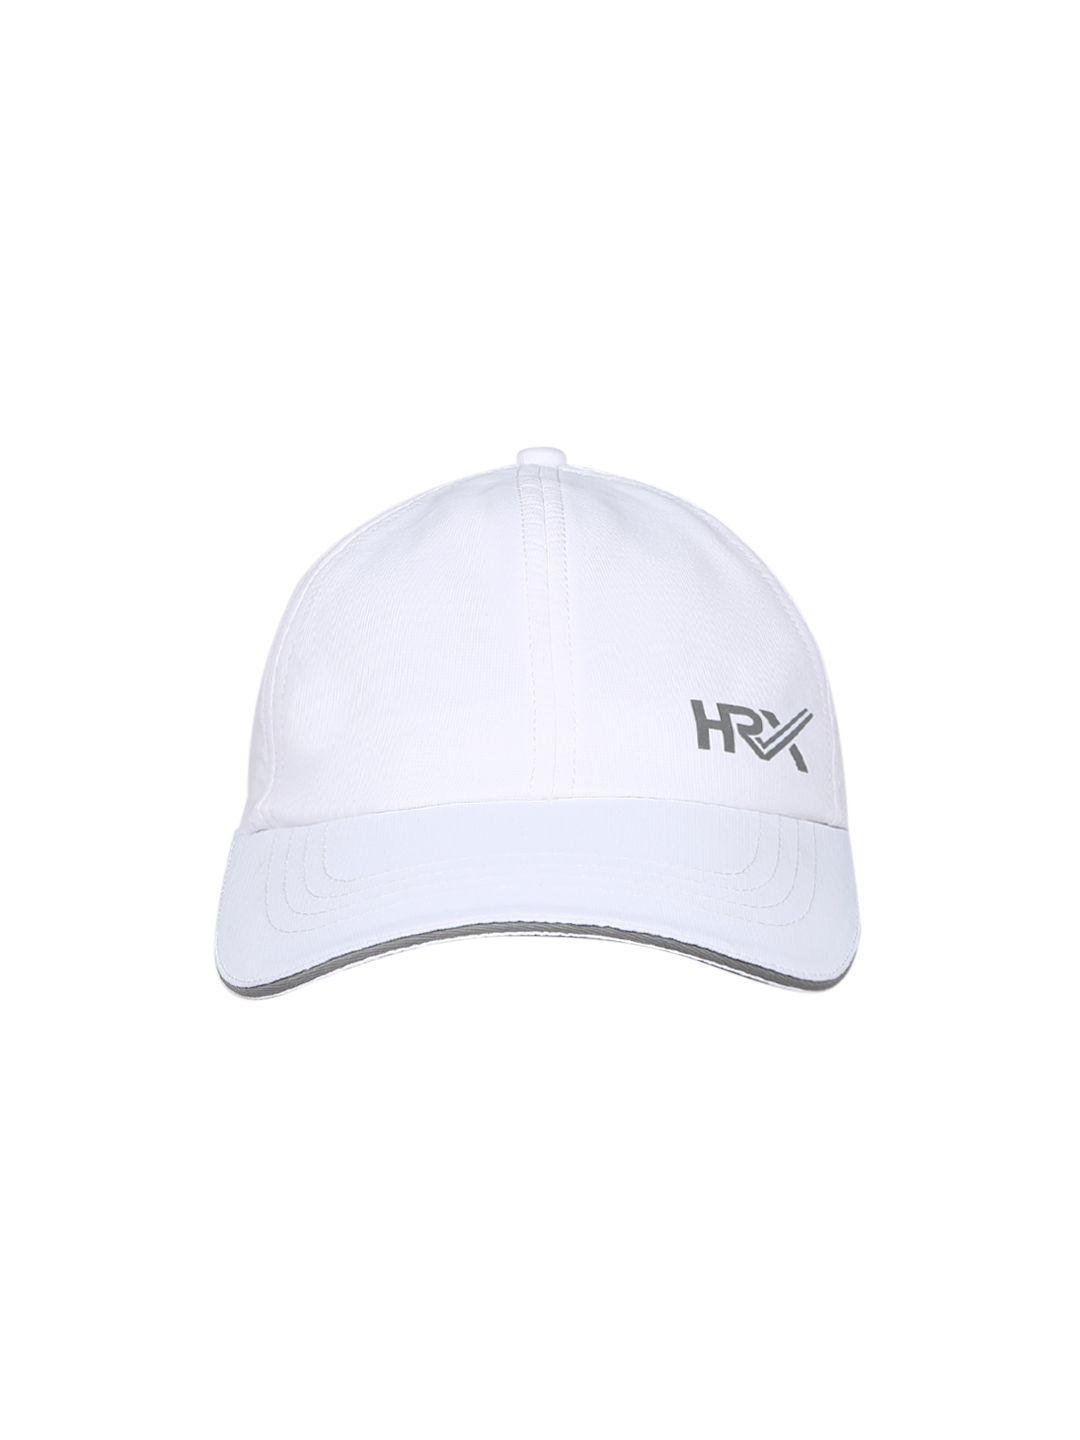 hrx by hrithik roshan men white solid lifestyle cap